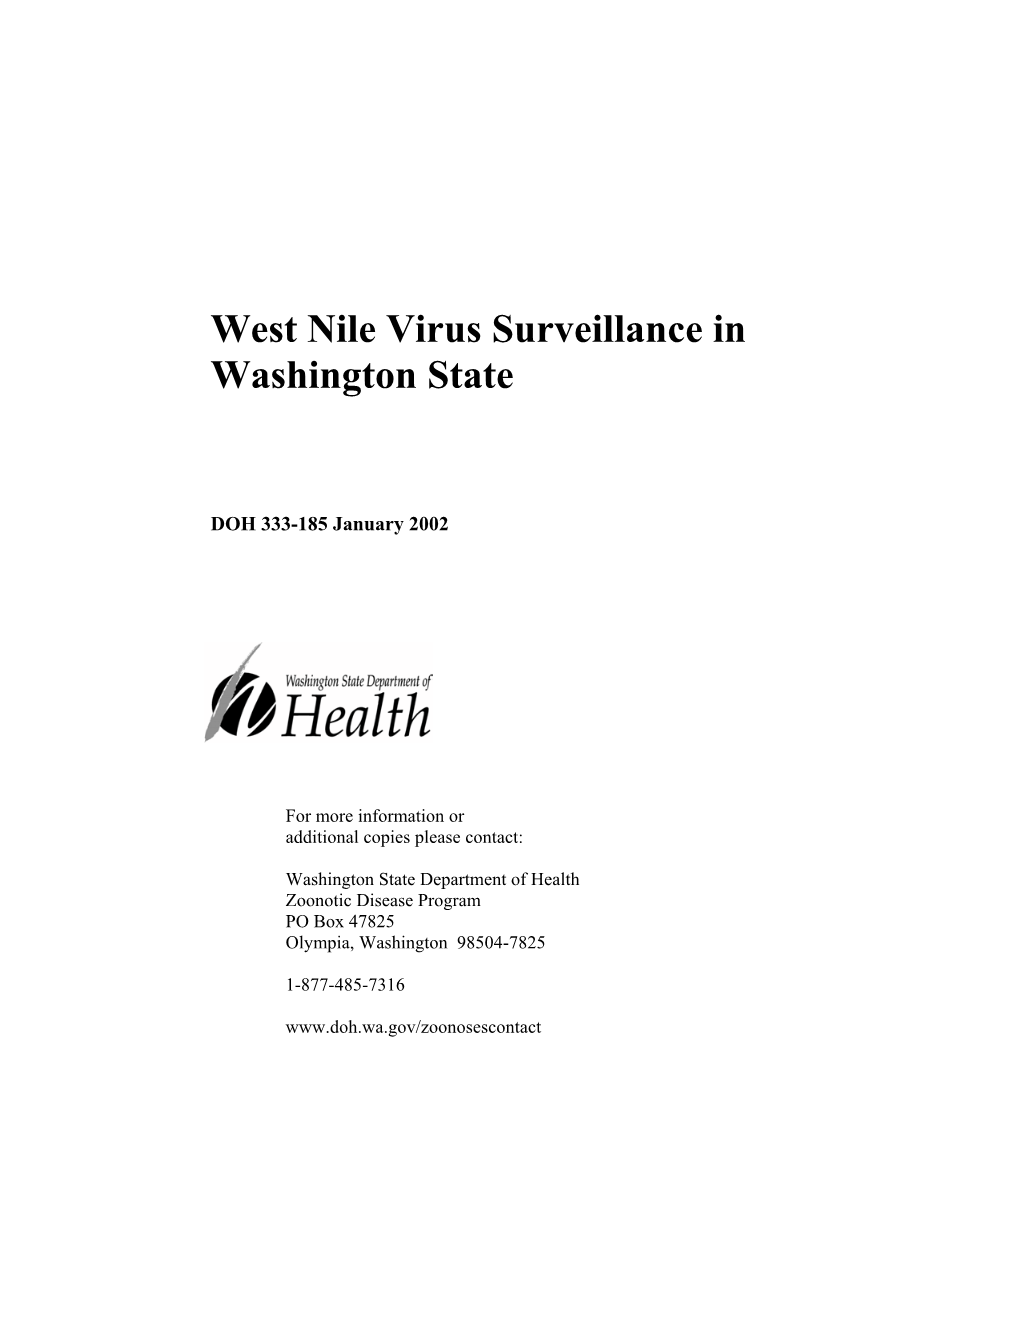 West Nile Virus Surveillance in Washington State, 2002 Report